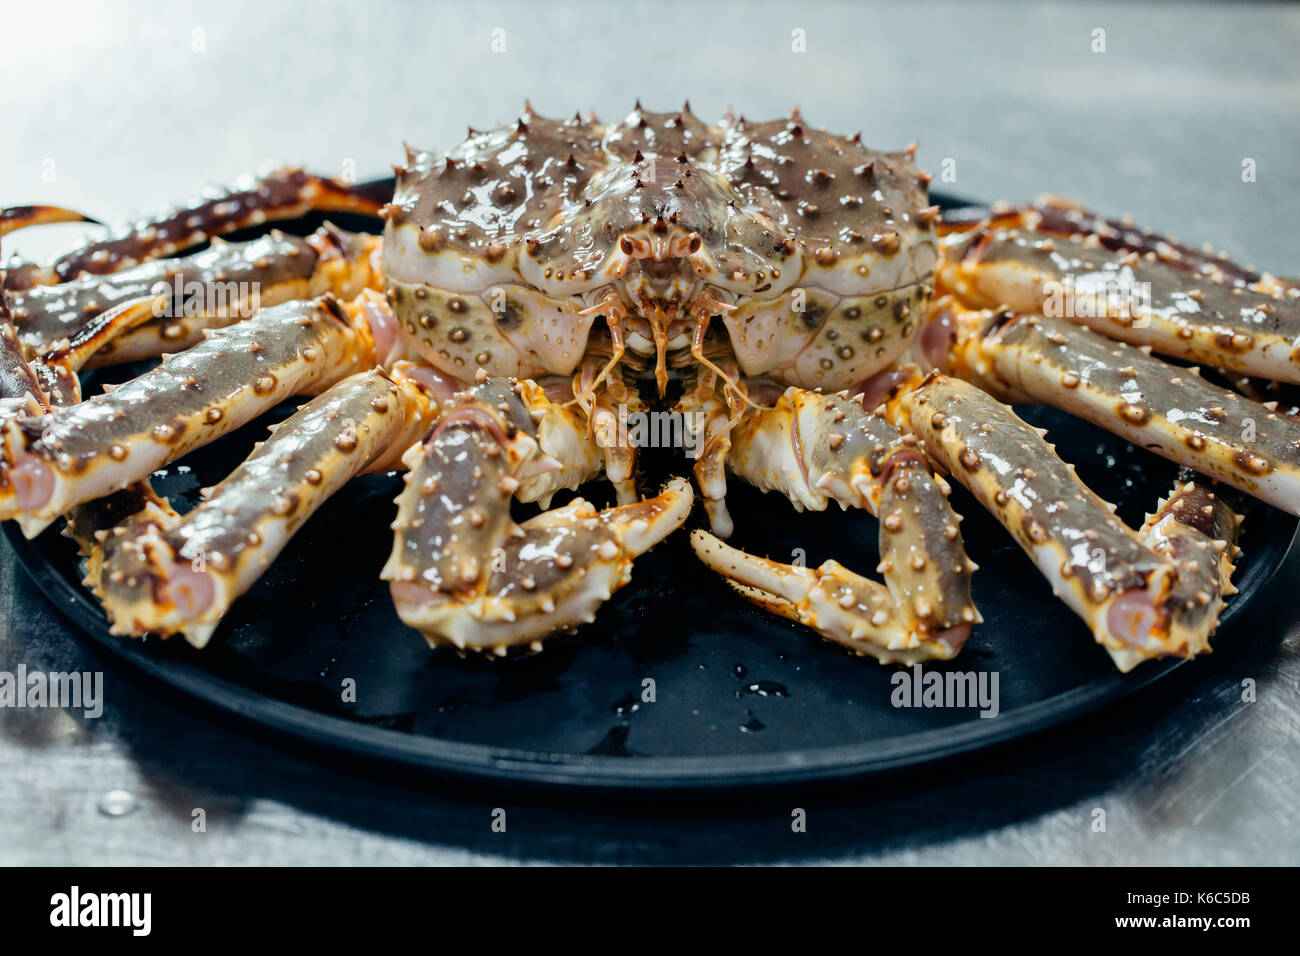 Taraba sea crabs or alaska king crab on black plate Stock Photo